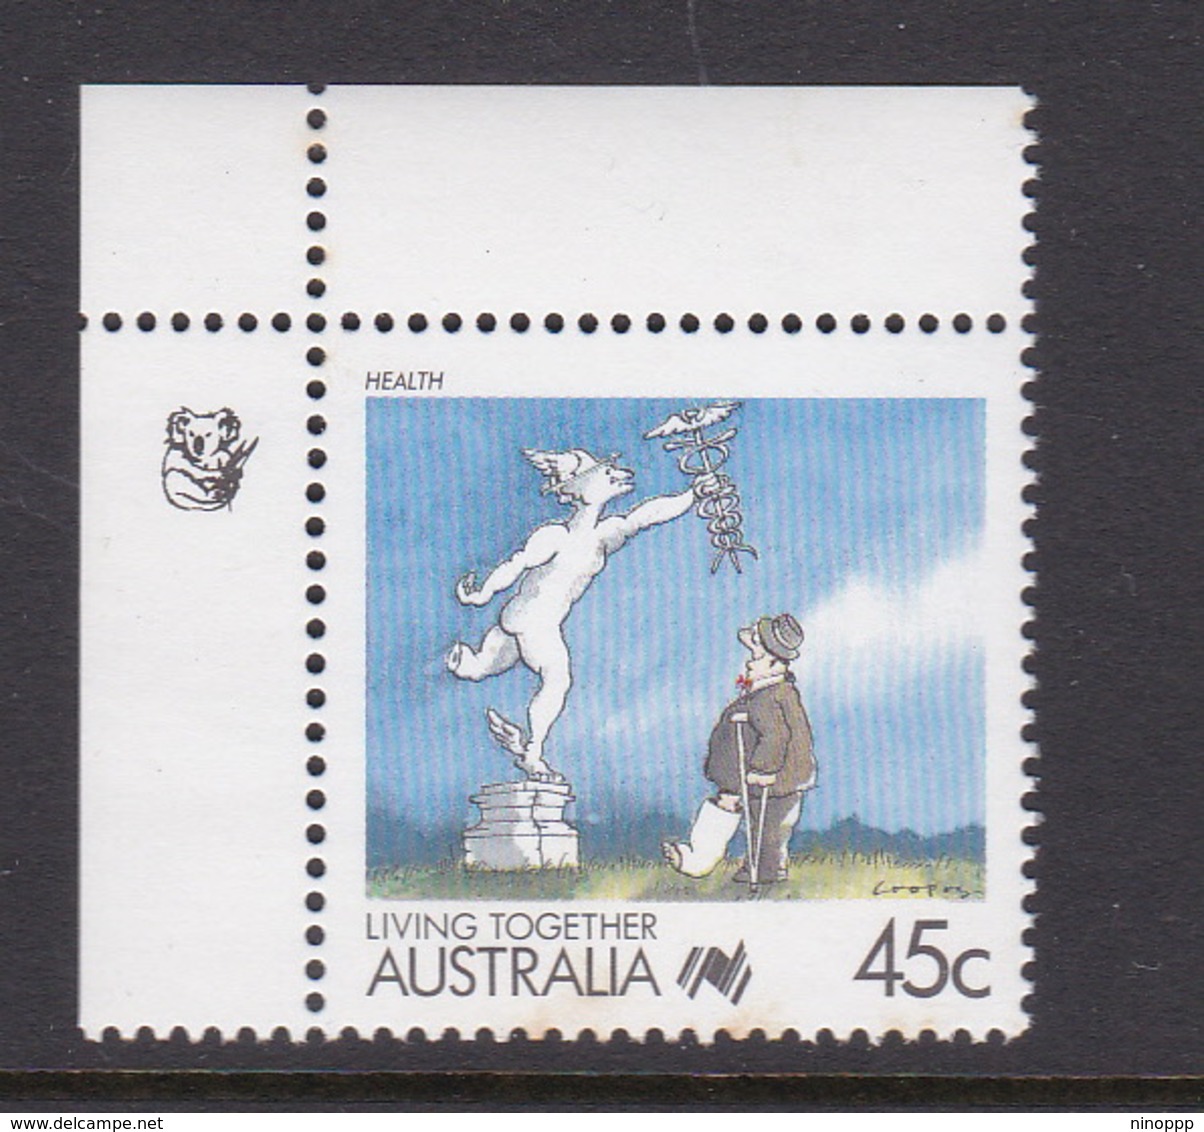 Australia ASC 1133a 1988 Living Together 45c Health 1 Koala,mint Never Hinged - Proofs & Reprints